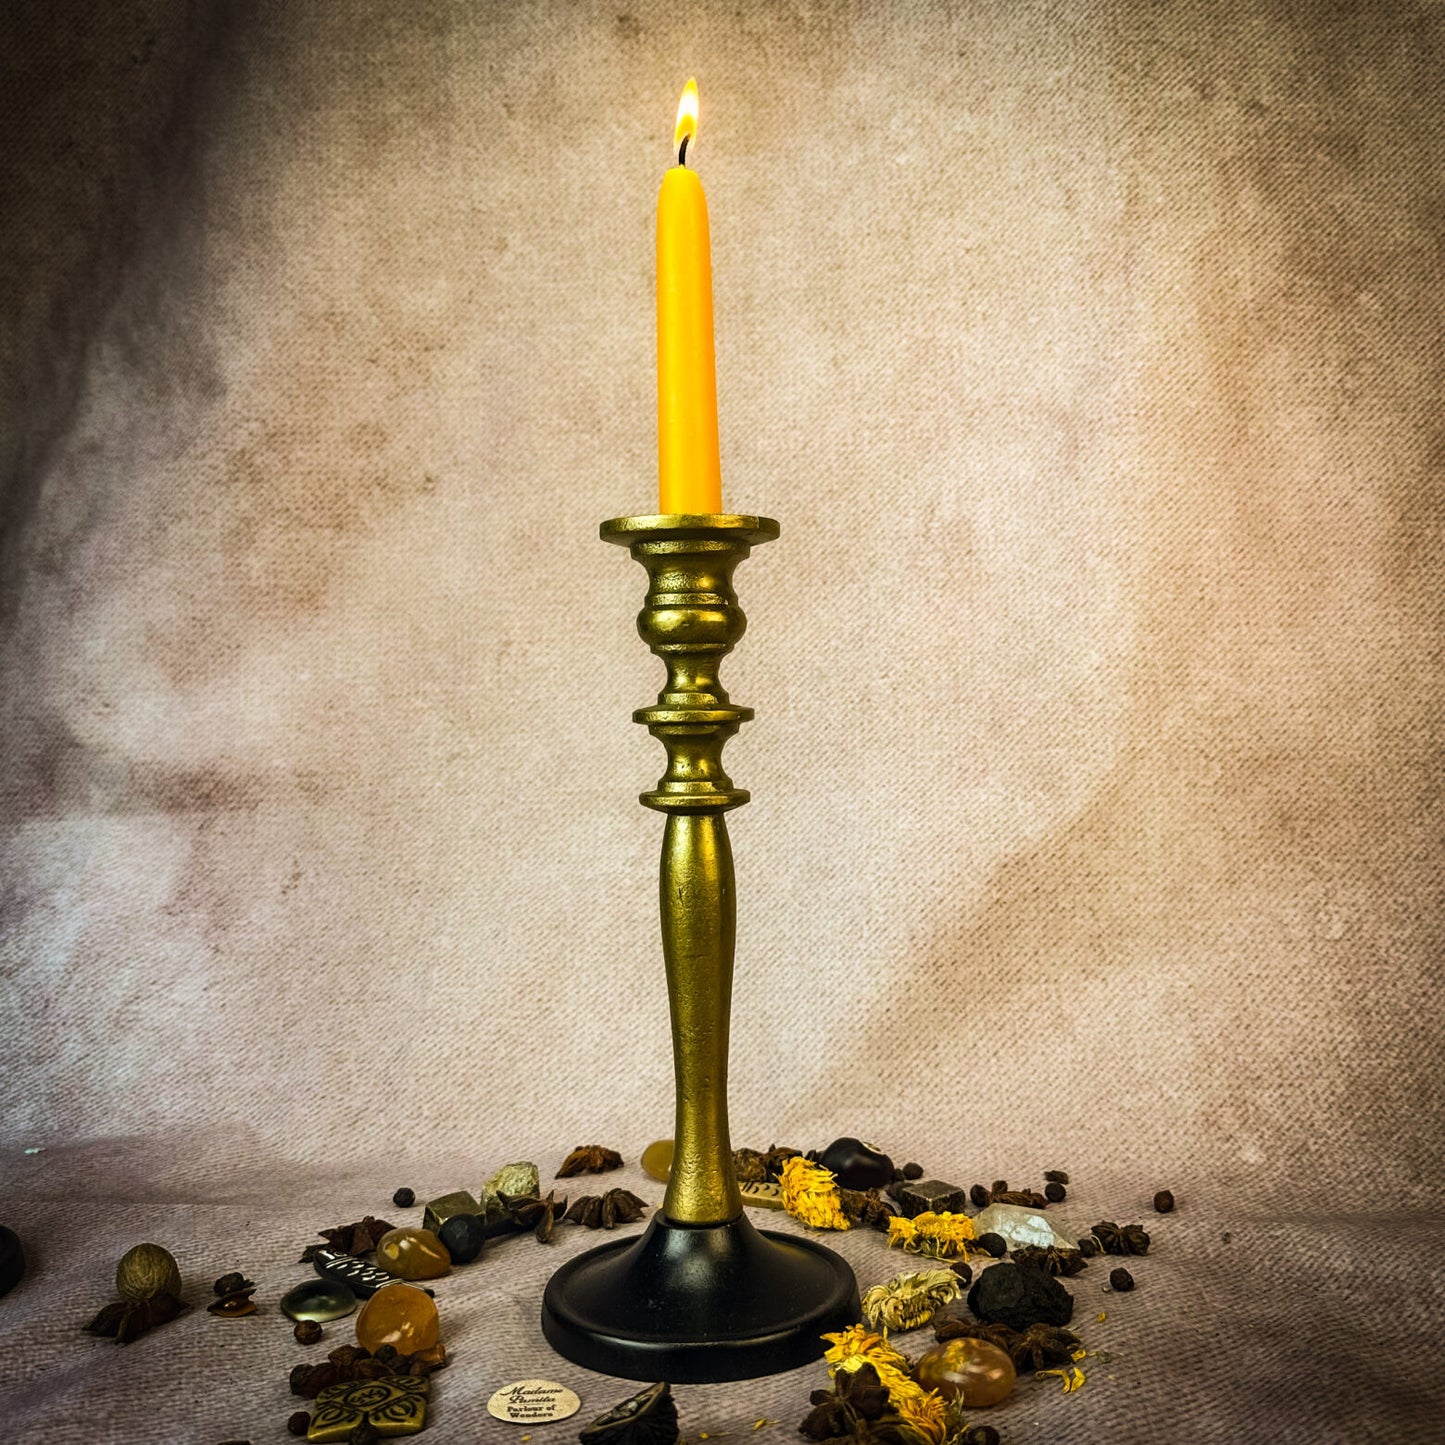 Baba Yaga Golden Spindle Candle Holder